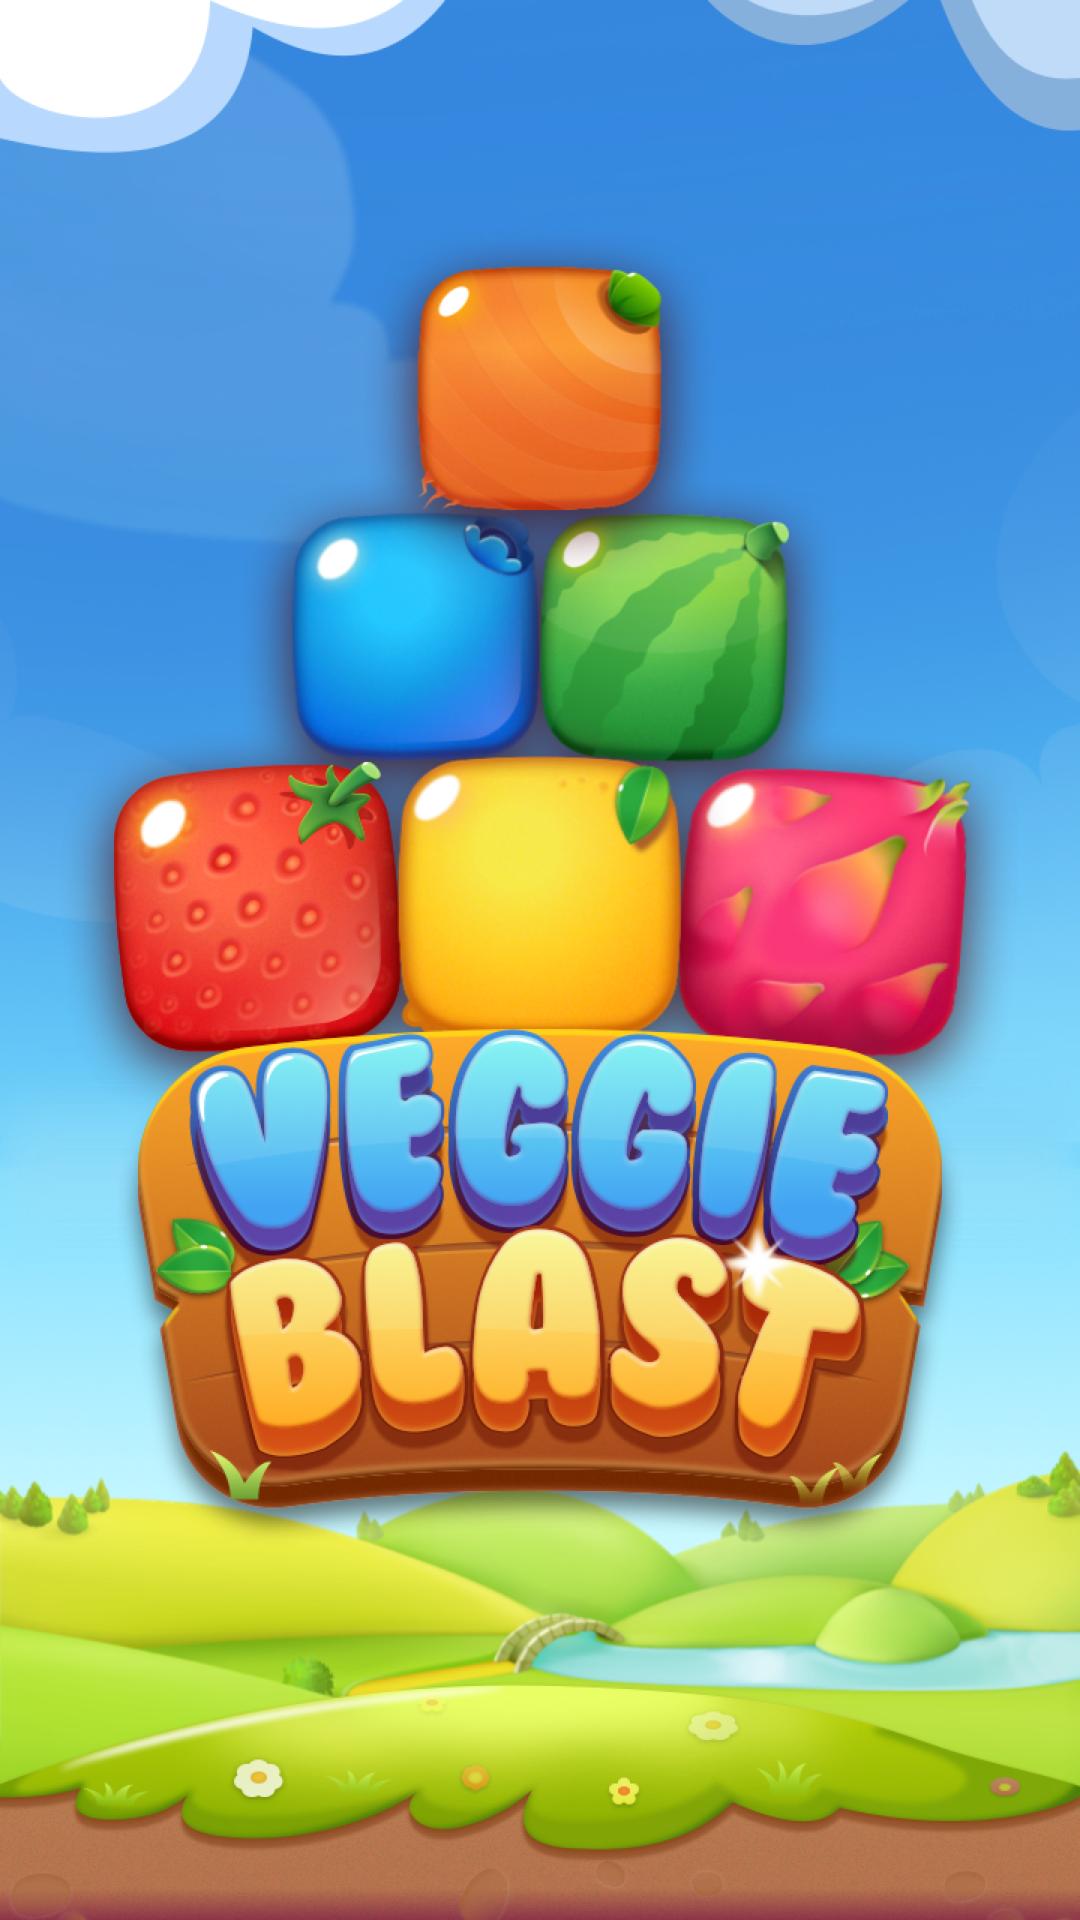 Veggie PopStar -Blast Game 1.0.5 Screenshot 1